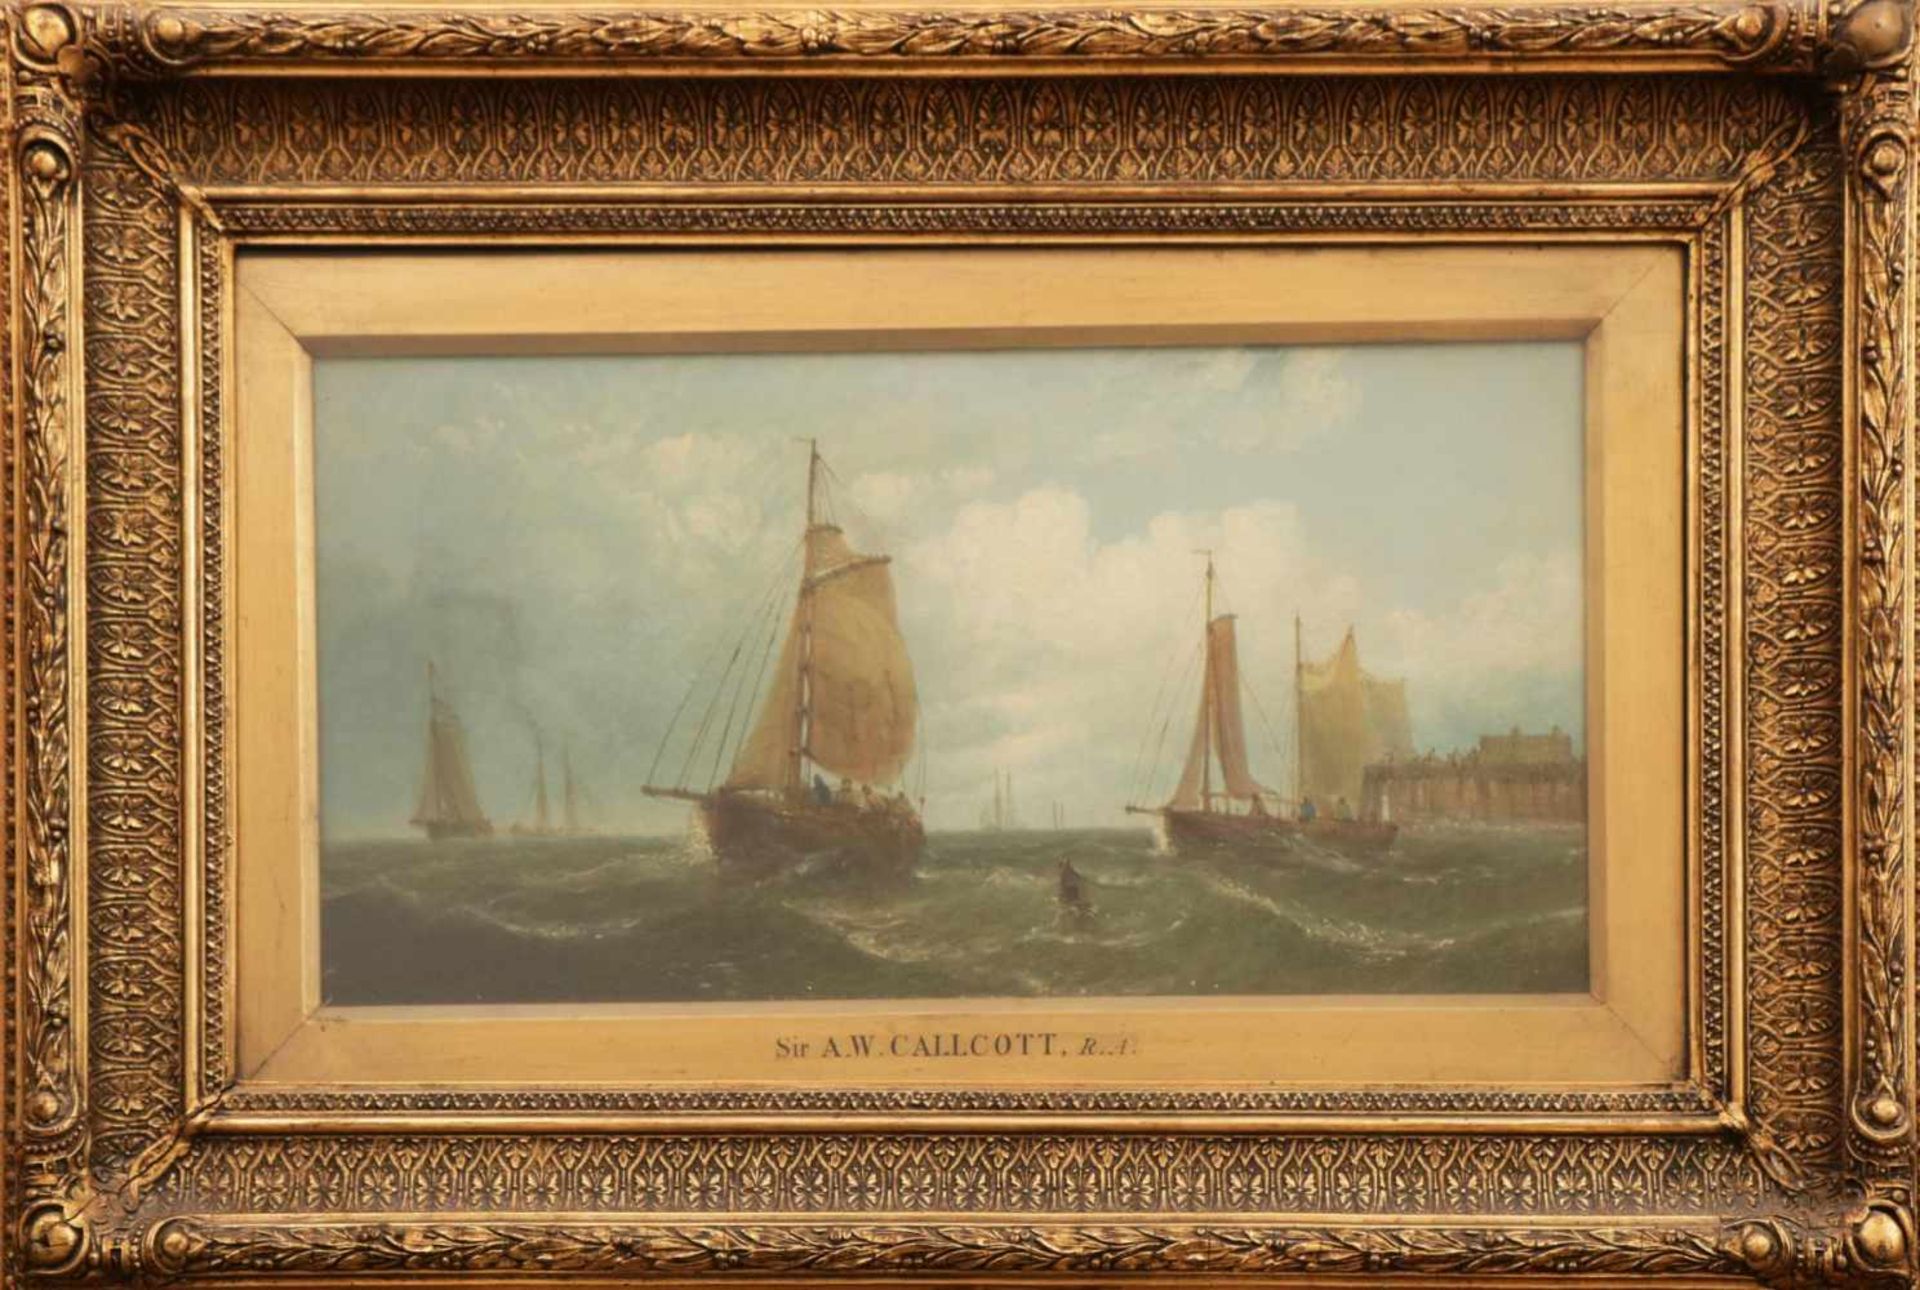 Zugeschrieben AUGUSTUS WALL CALLCOTT (1779 London-1844 ebenda)Öl auf Leinwand, ¨Segler vor Pier¨,